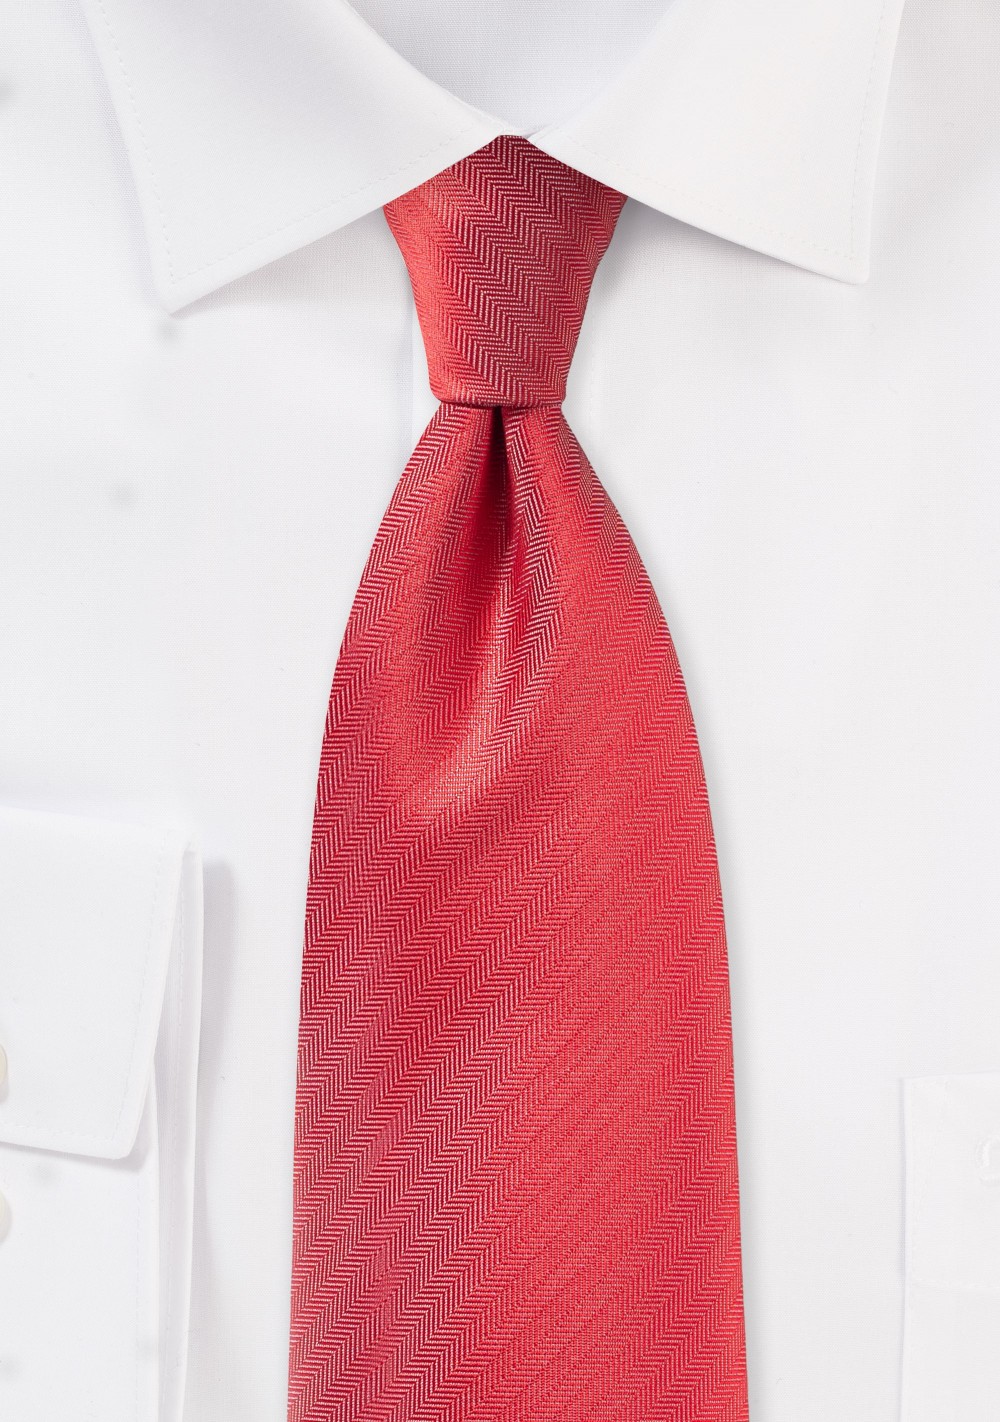 Bright Red Herringbone Textured Tie